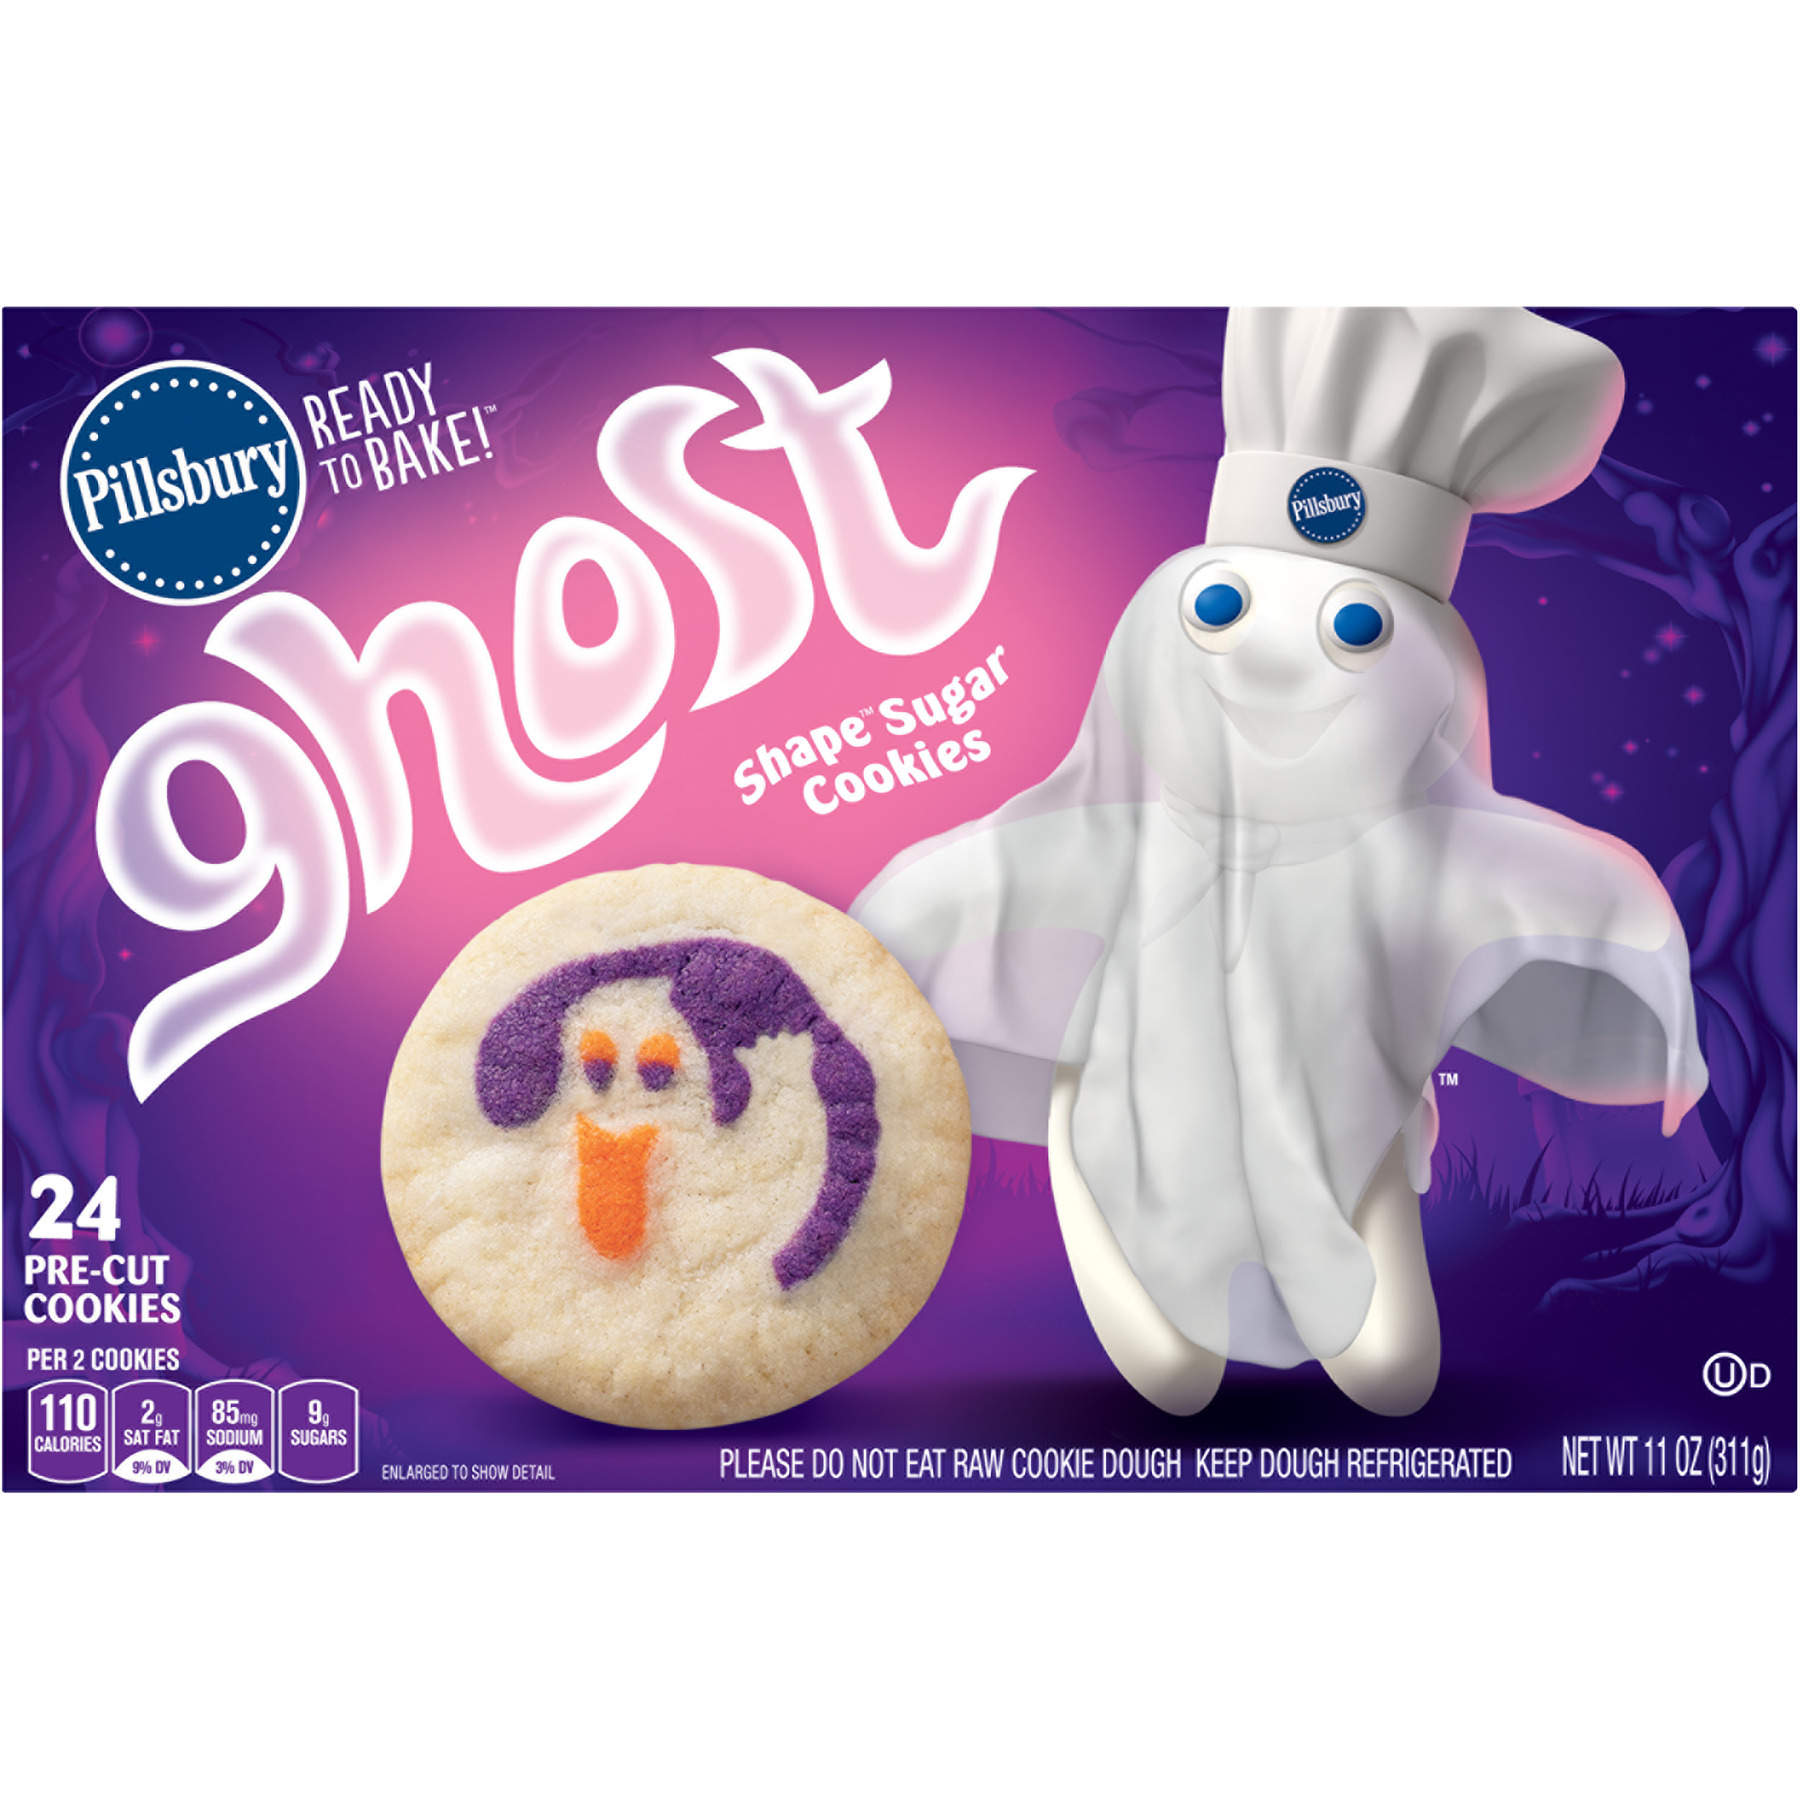 Pillsbury Ready to Bake!™ Ghost Shape® Sugar Cookies